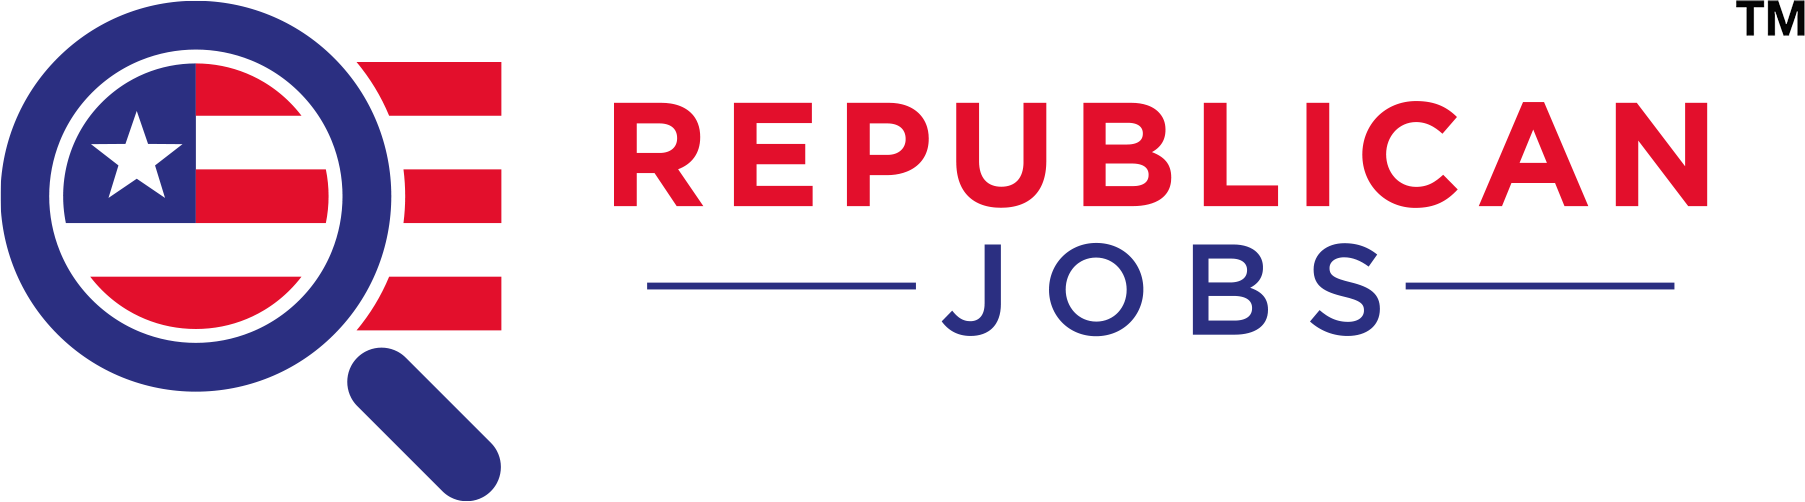 Republican jobs in Ellicott City Maryland jobs